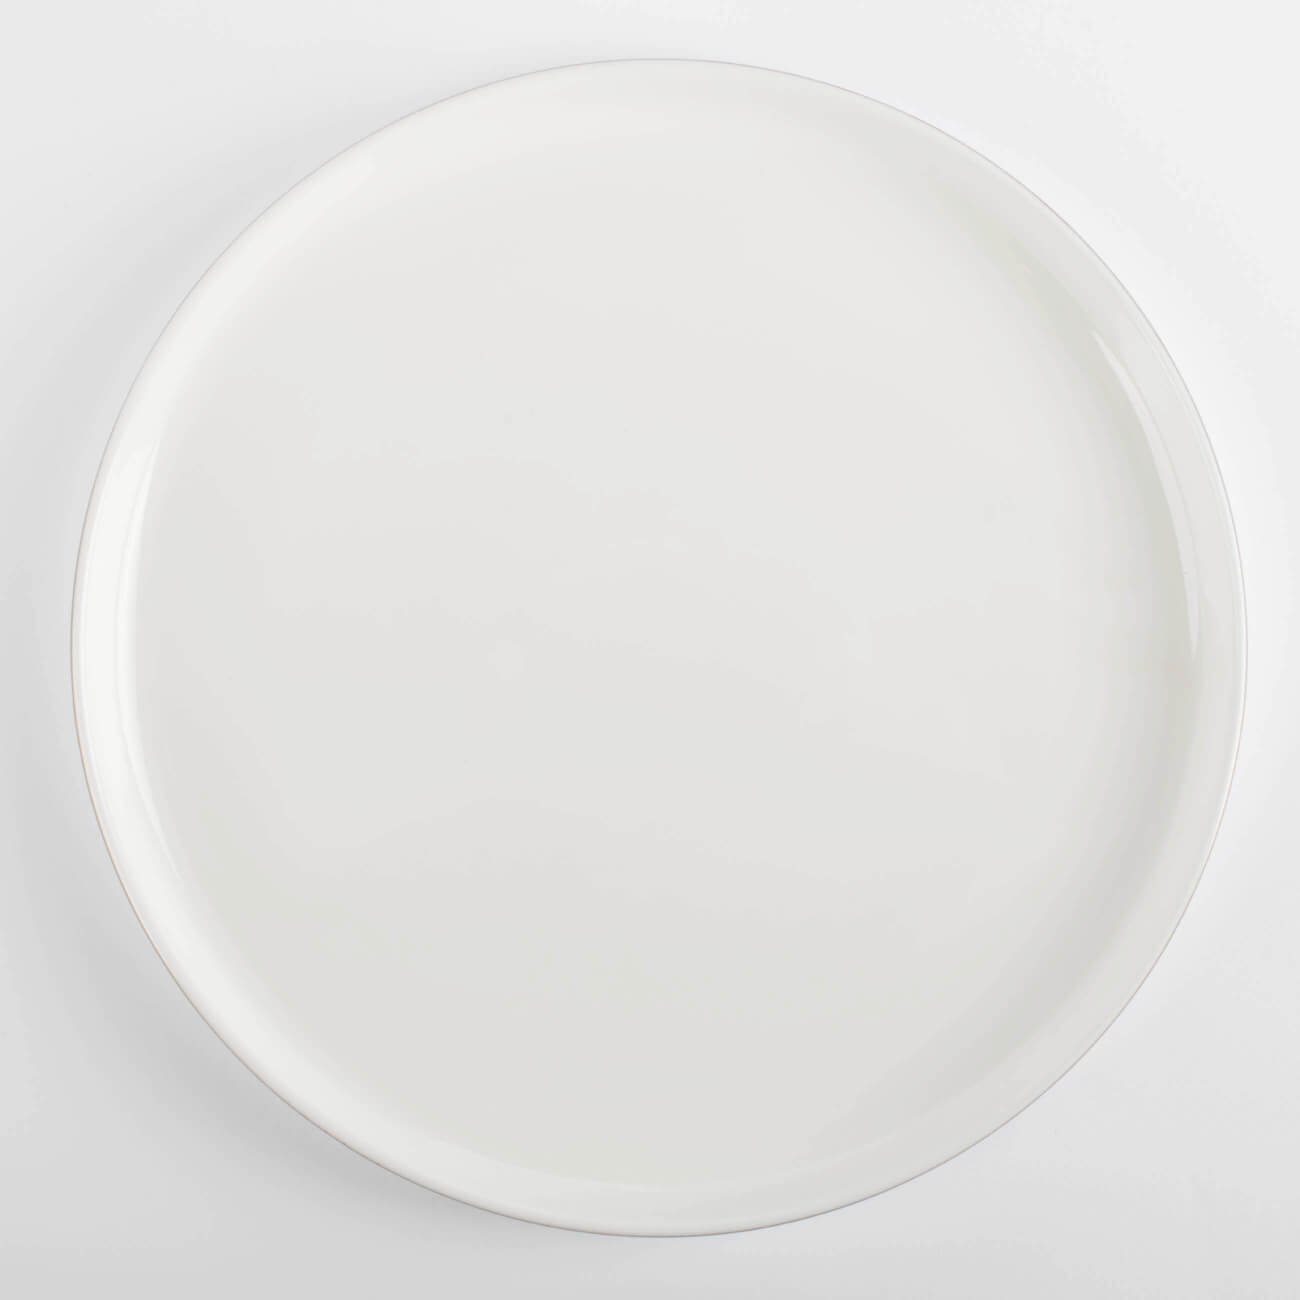 Тарелка обеденная, 26 см, фарфор F, белая, Ideal gold тарелка обеденная noritake английские травы 27 5 см